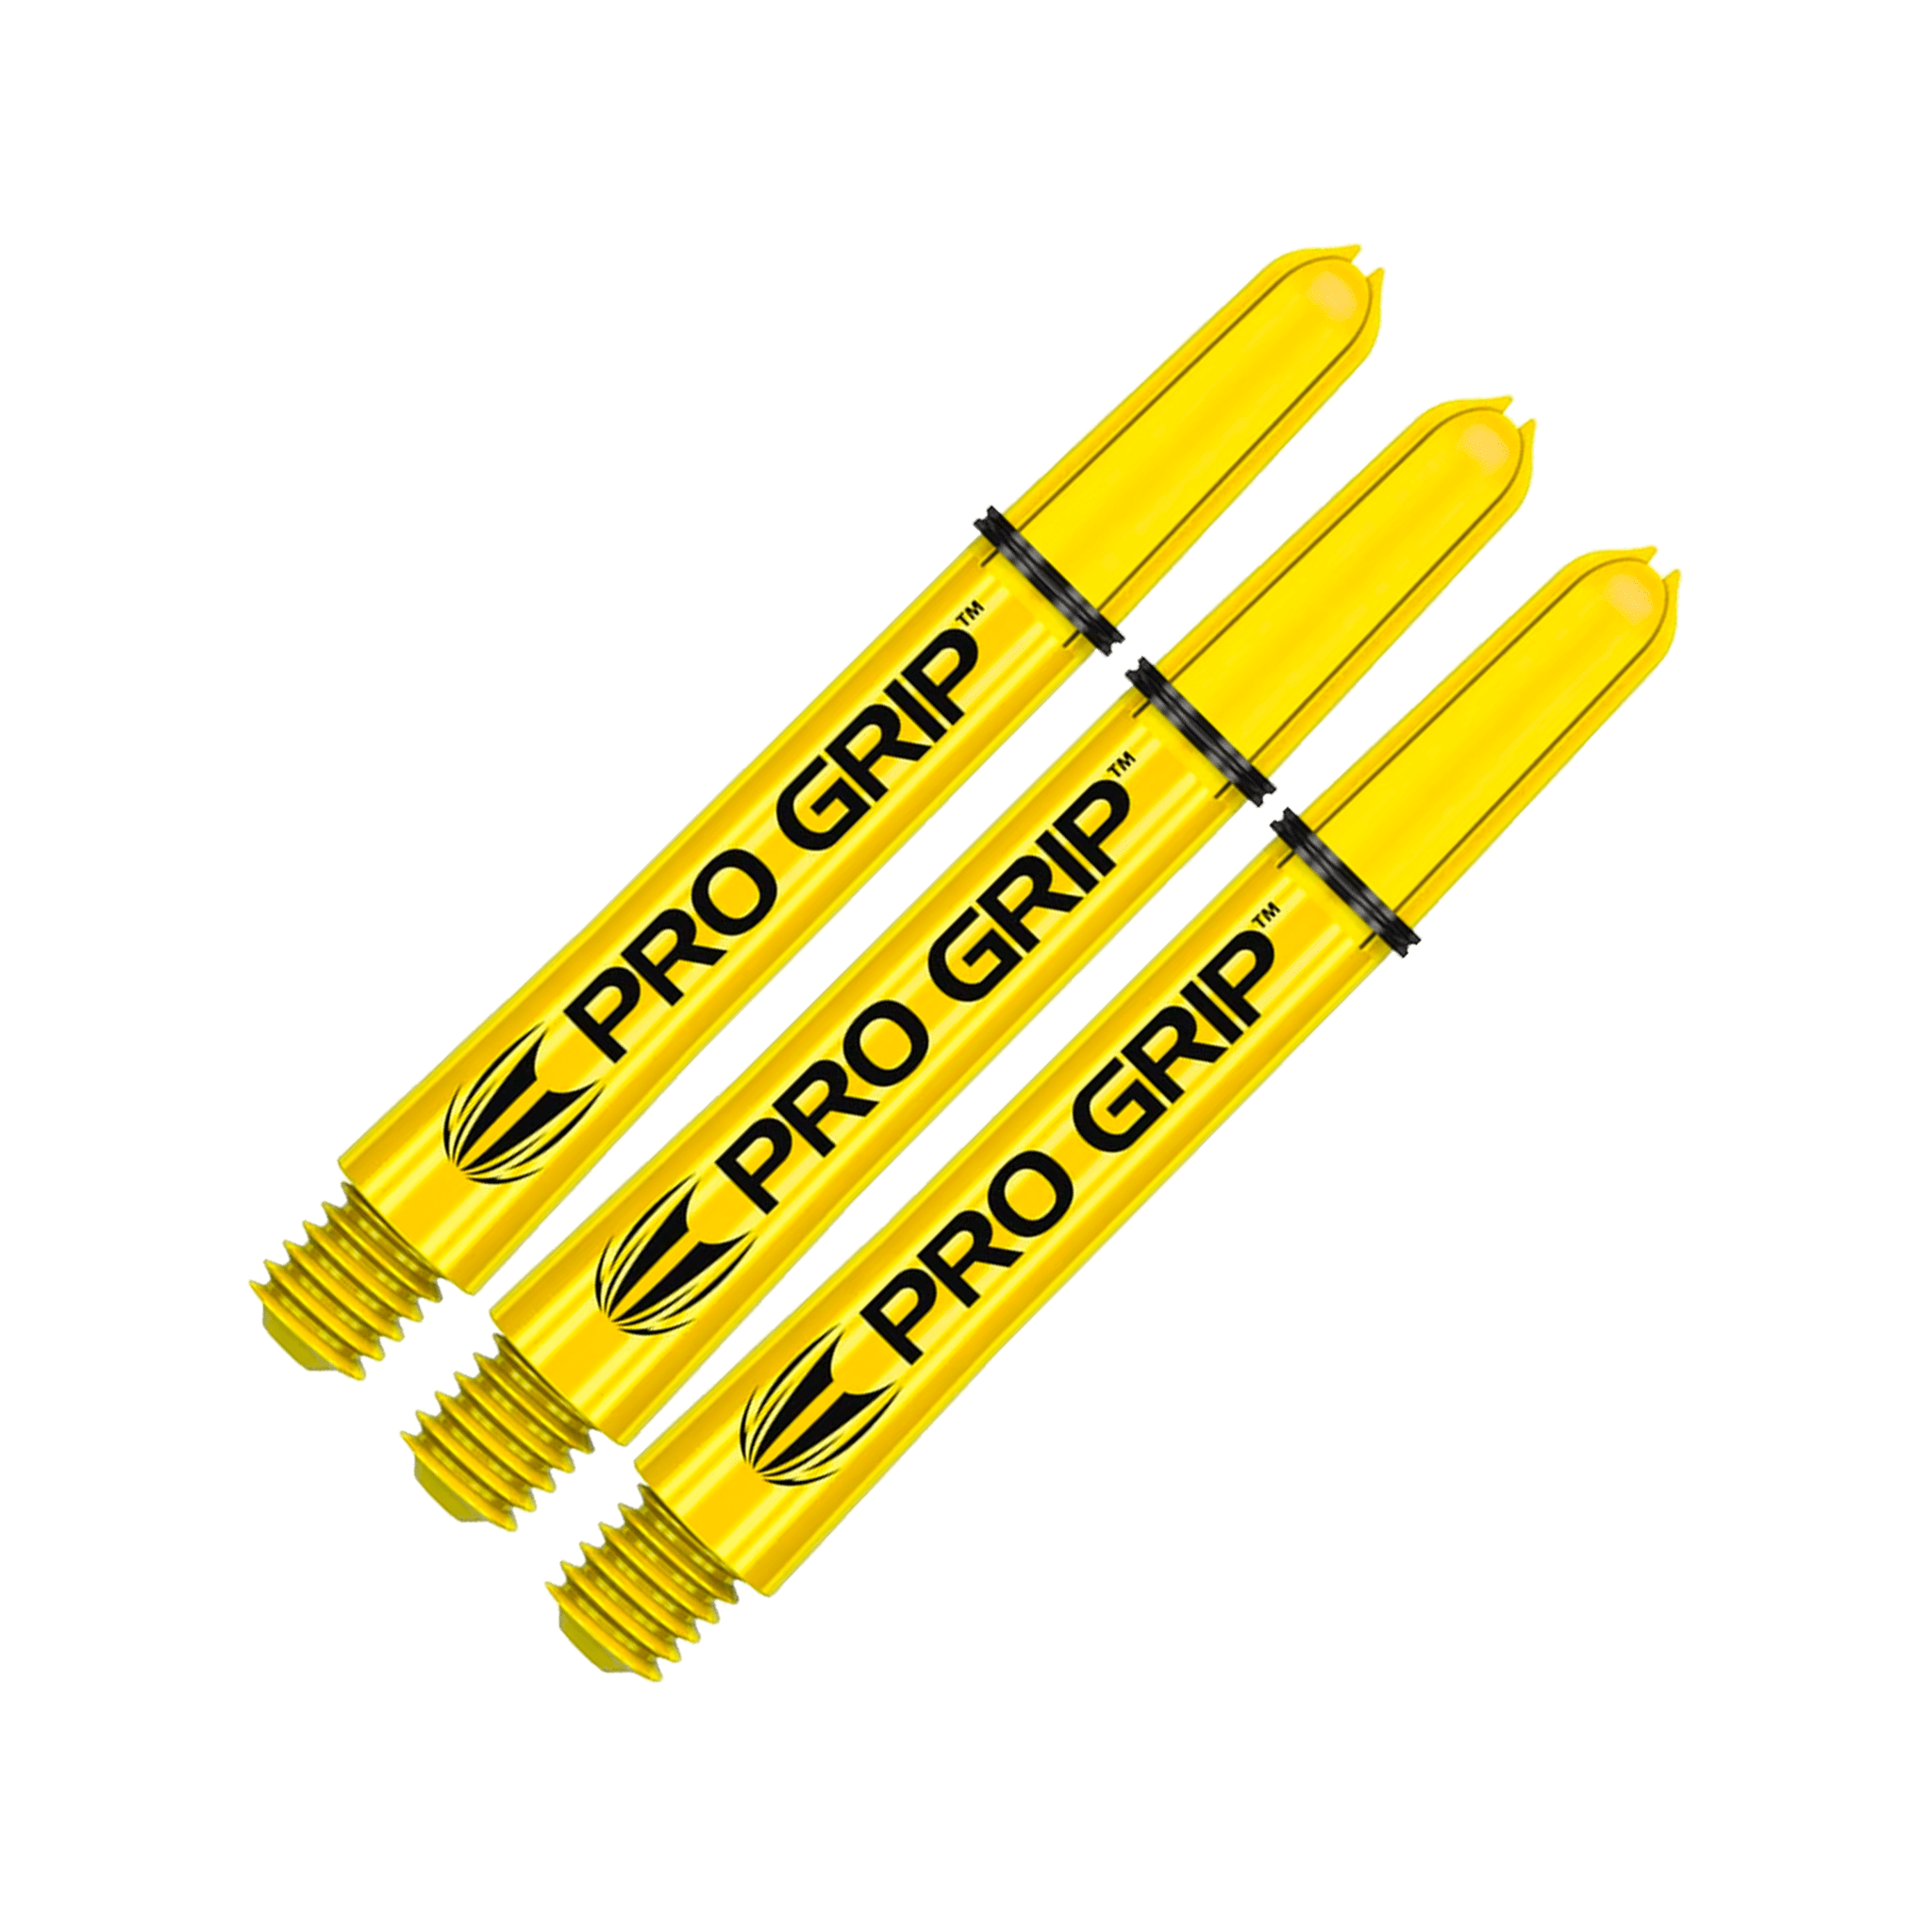 Target Pro Grip Multi Pack - Nylon Dart Shafts (3 Sets) Yellow / Intermediate (41mm) Shafts